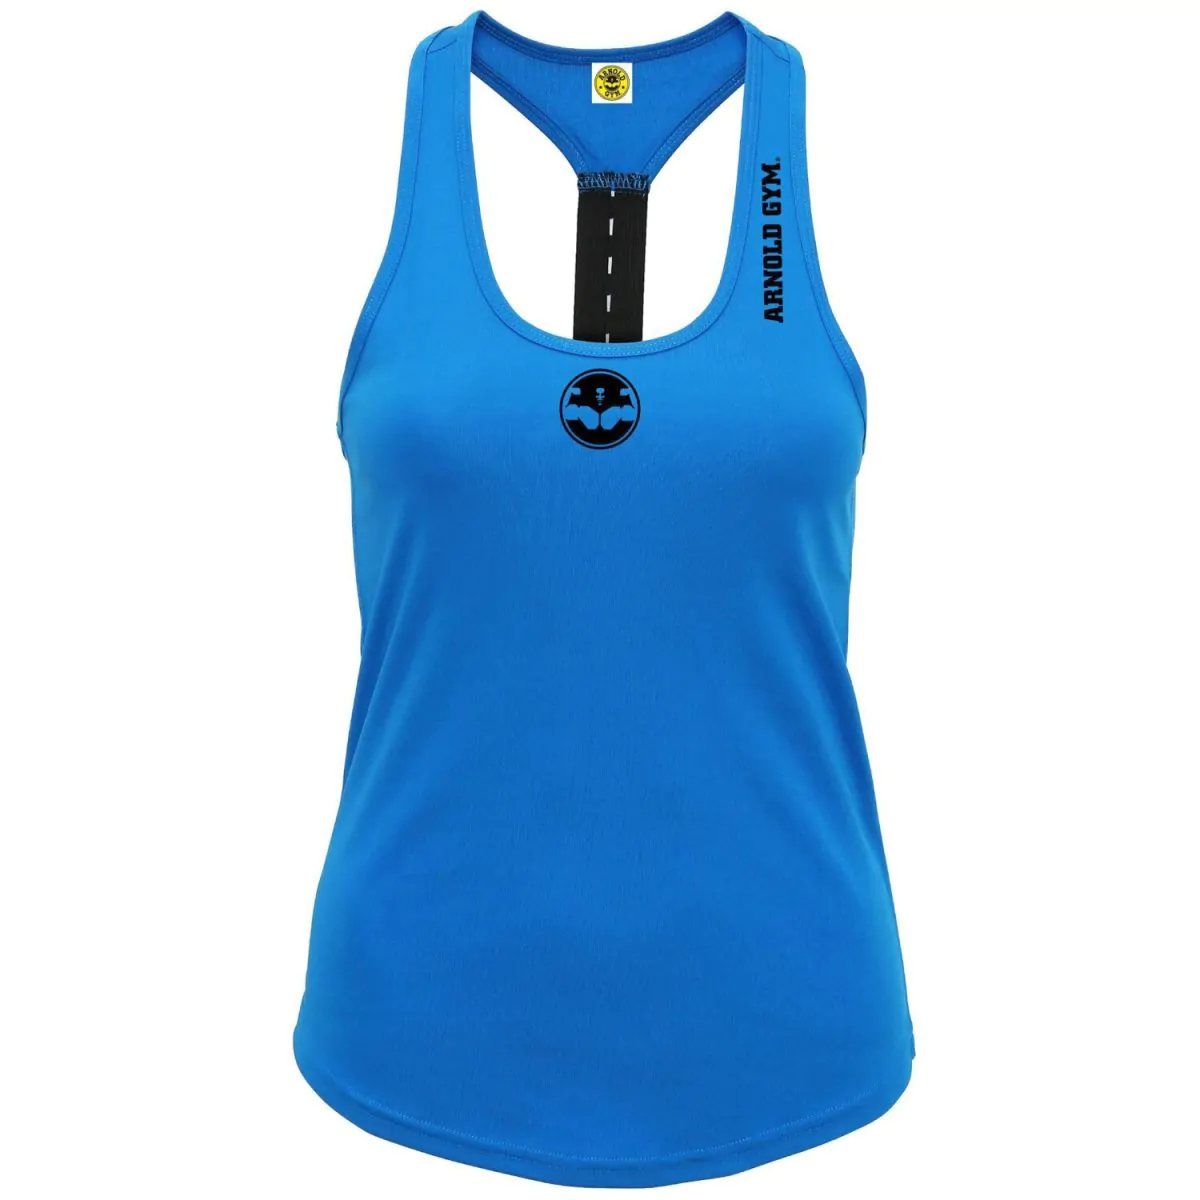 0000344 ladies fitness sports performance blue vest